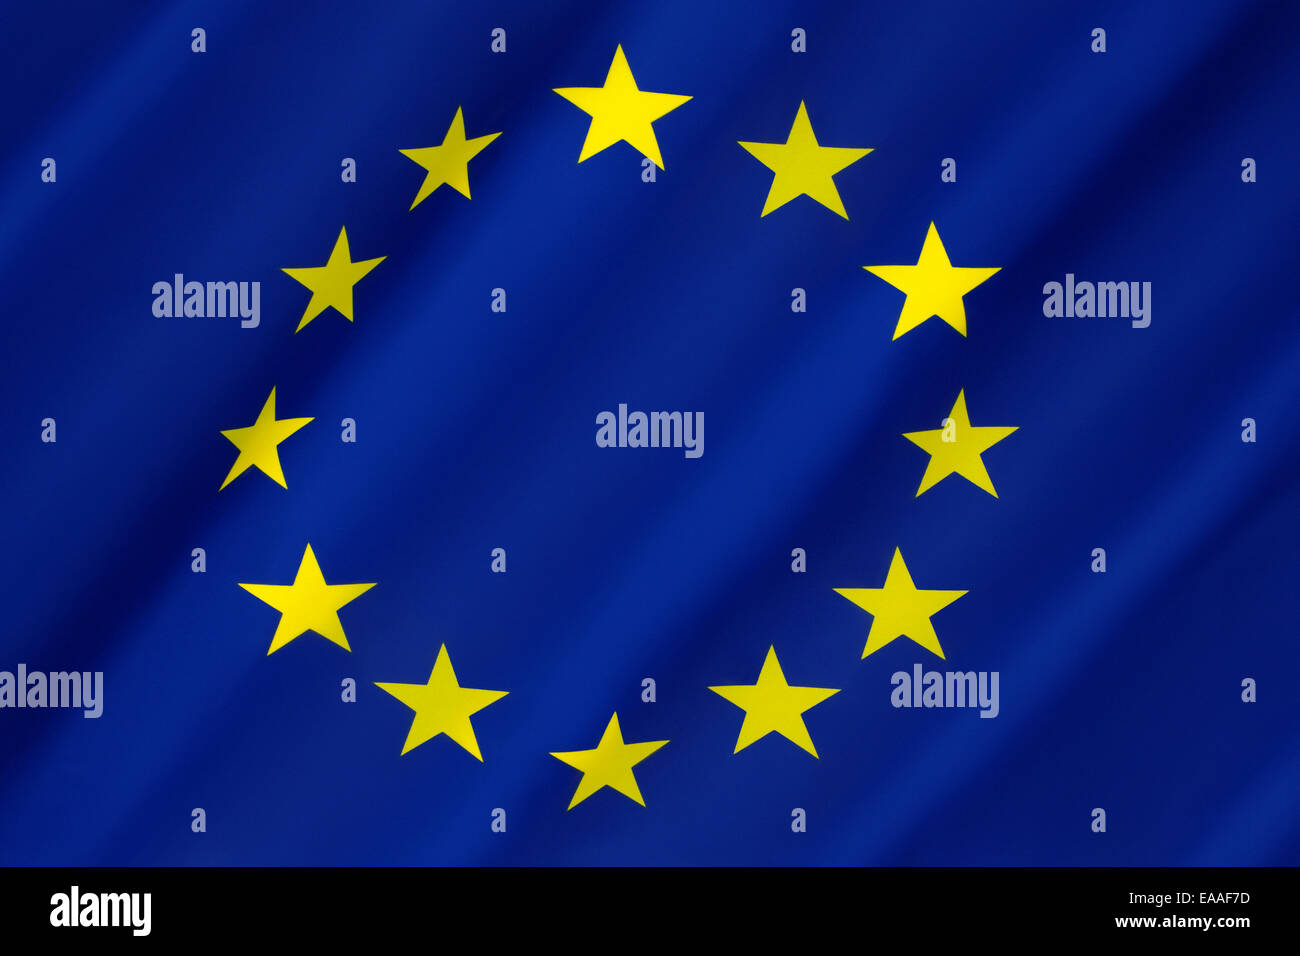 Flagge von Europa - Europäische Union Stockfoto